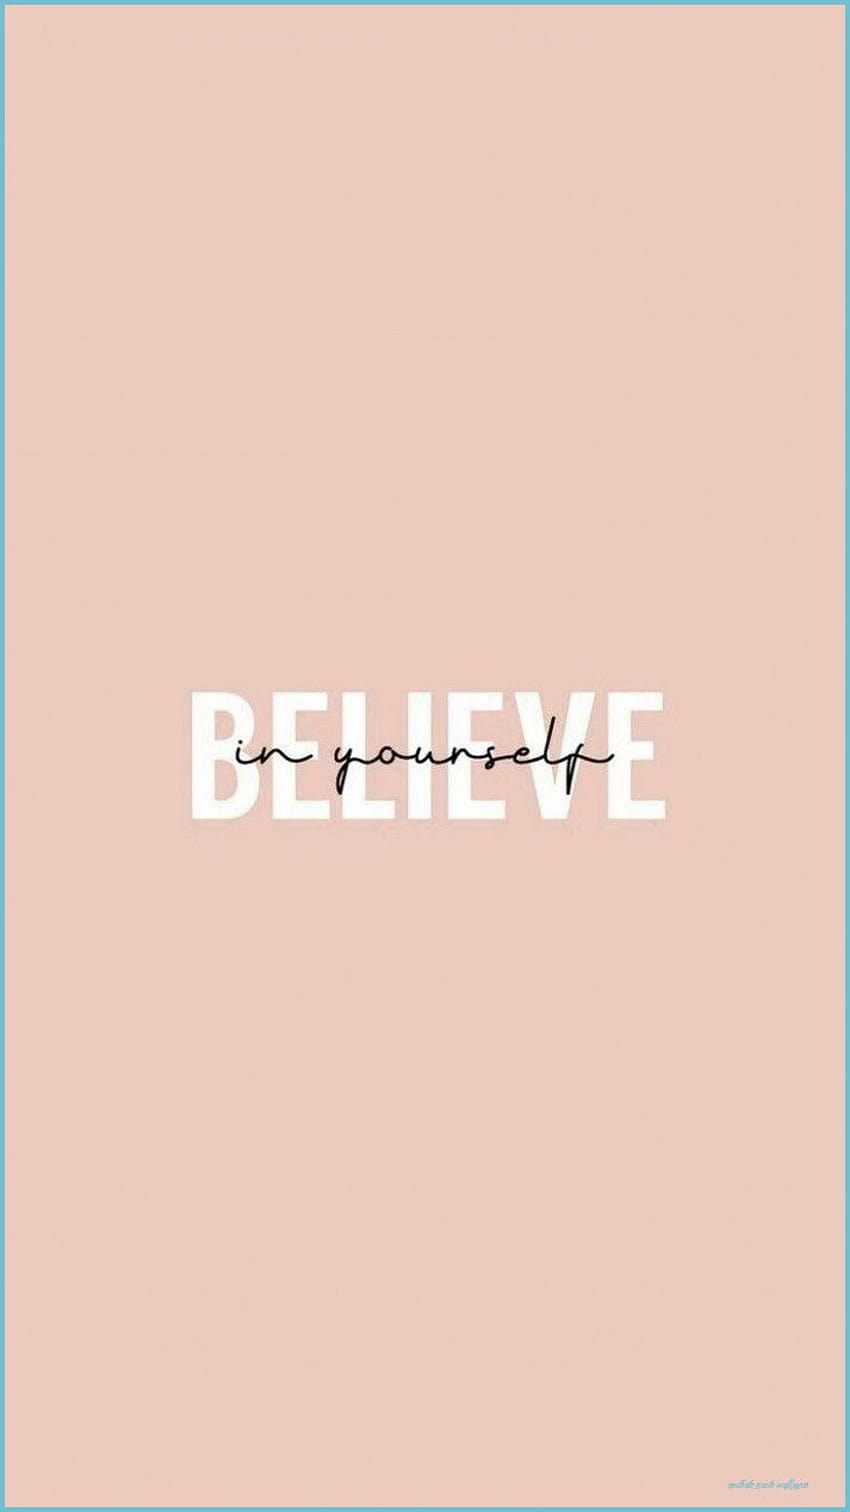 stay positive tumblr wallpaper